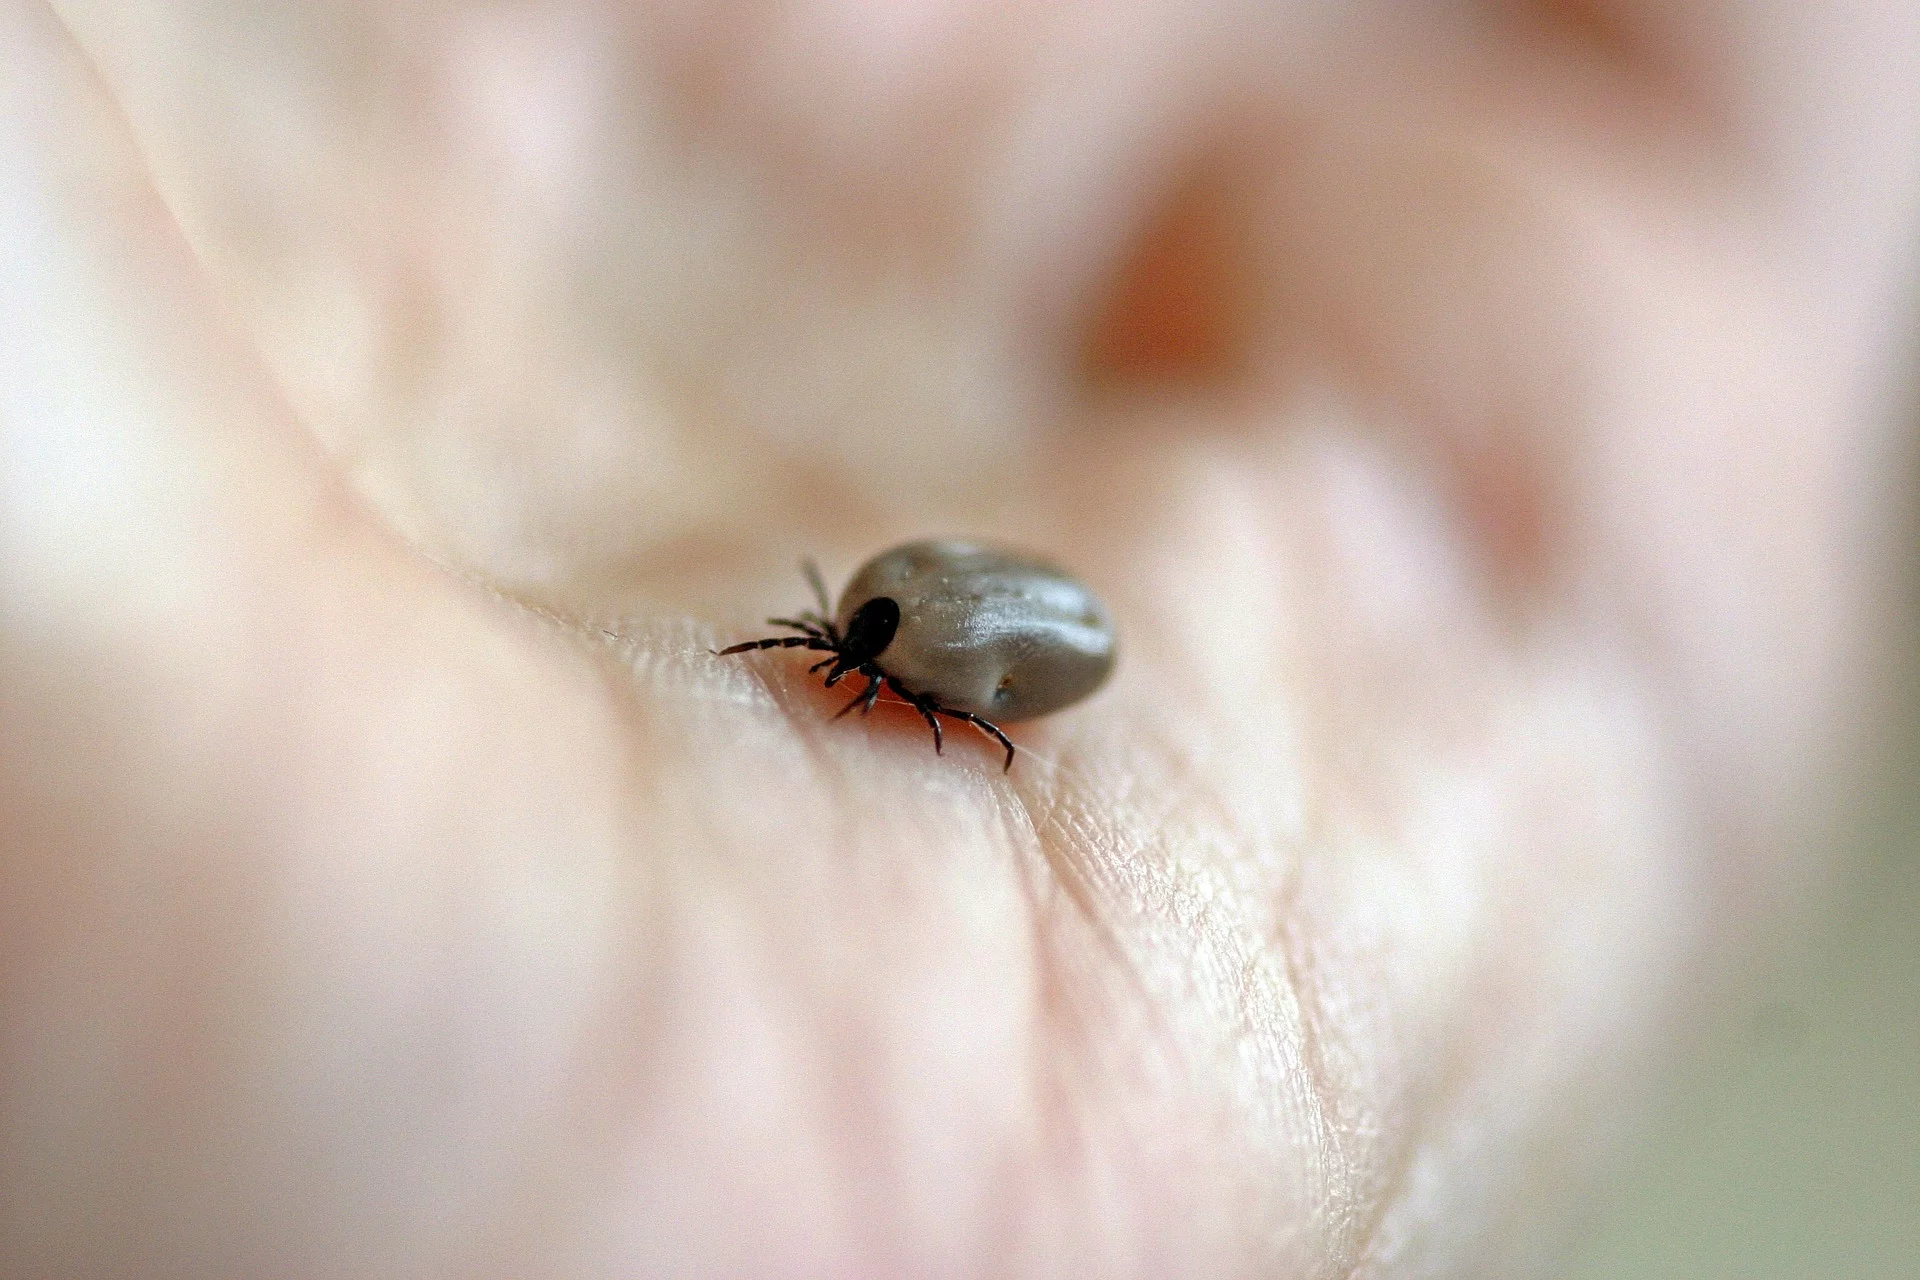 ticks infestation on animals